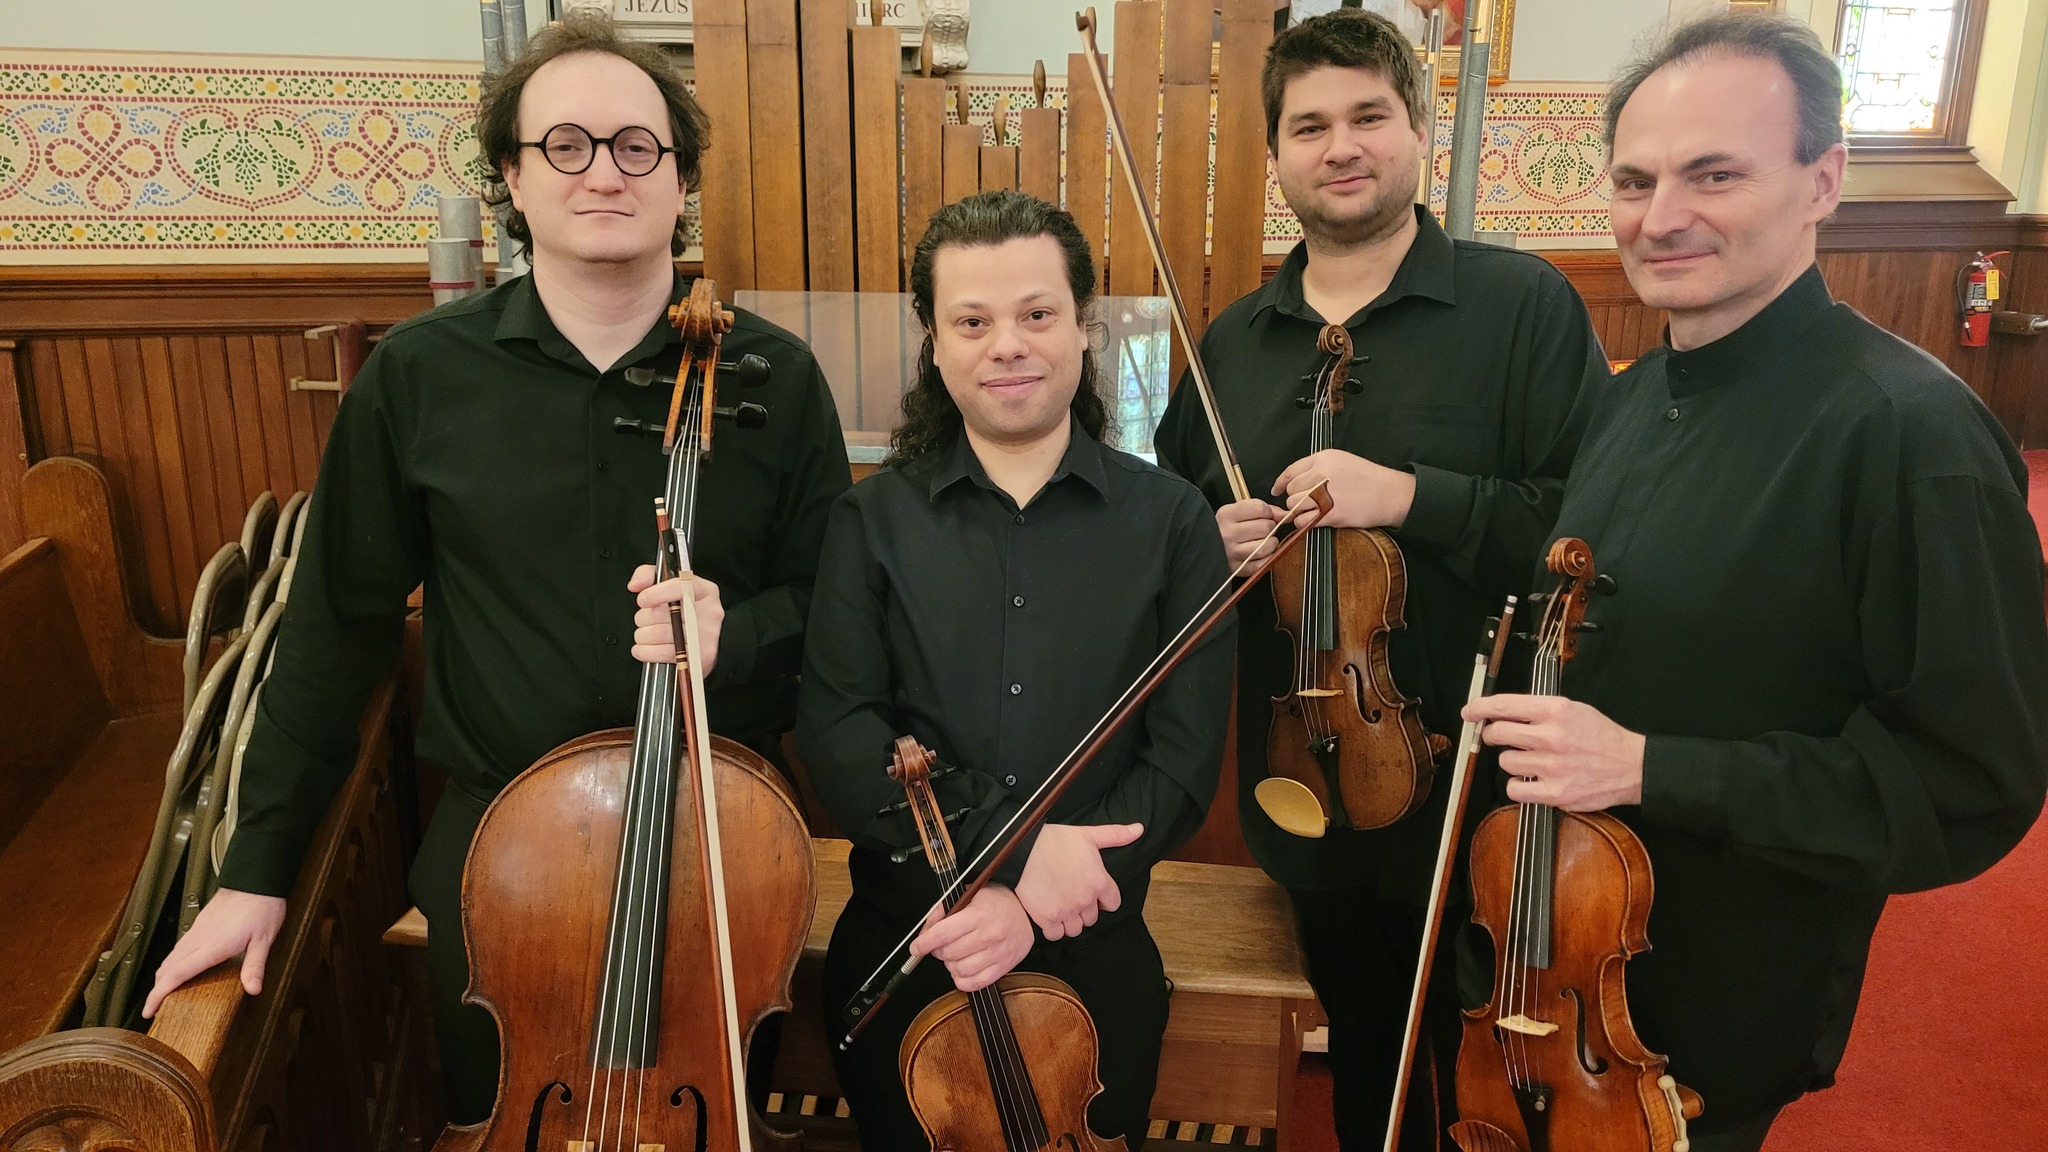 A recital by the Charter Oak String Quartet in New York